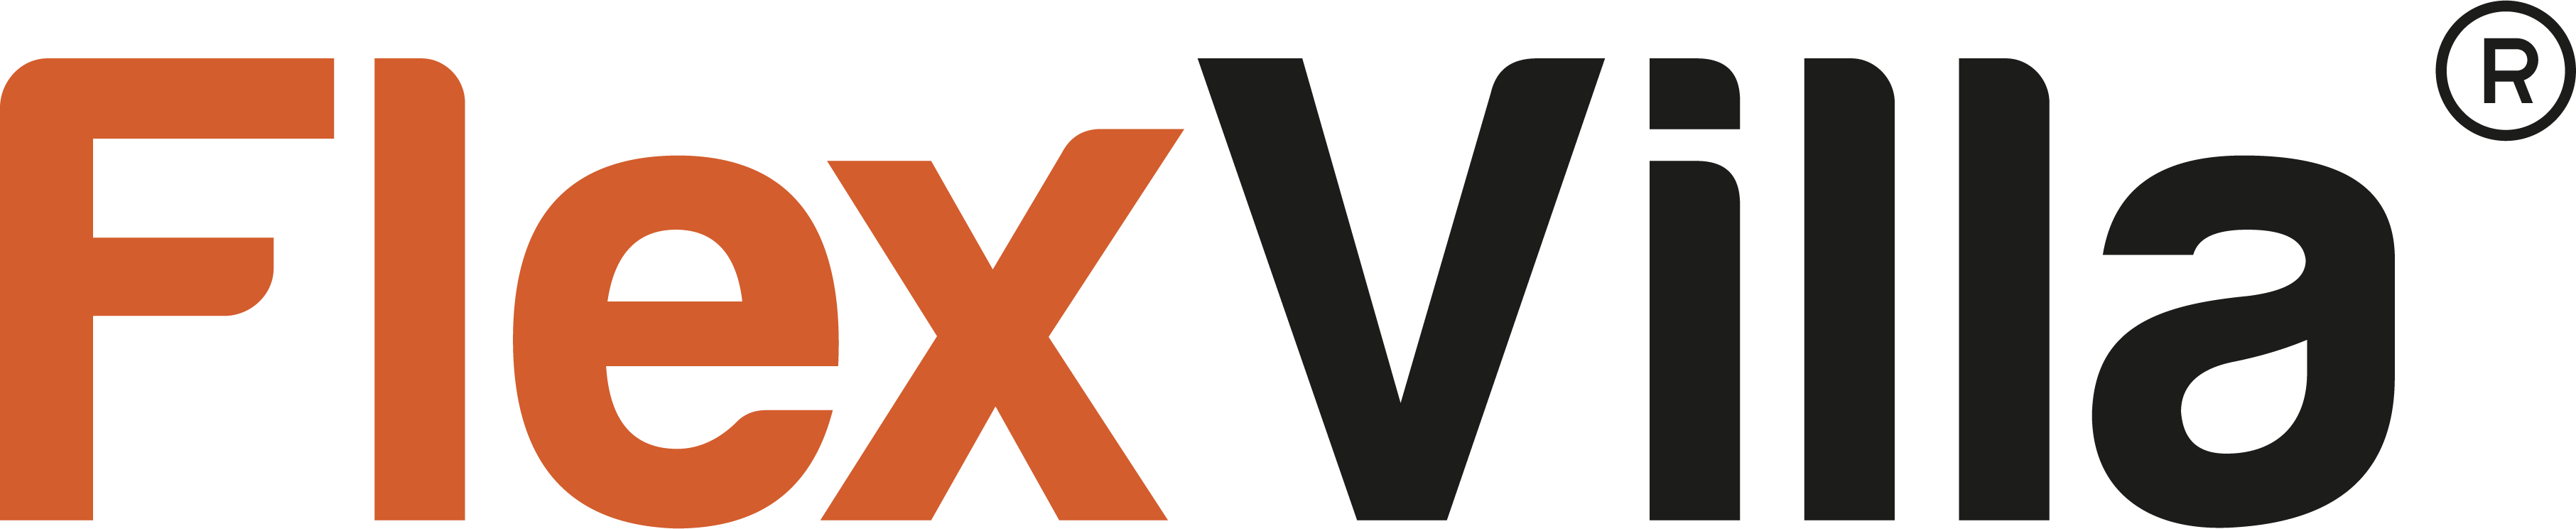 flexvilla logo